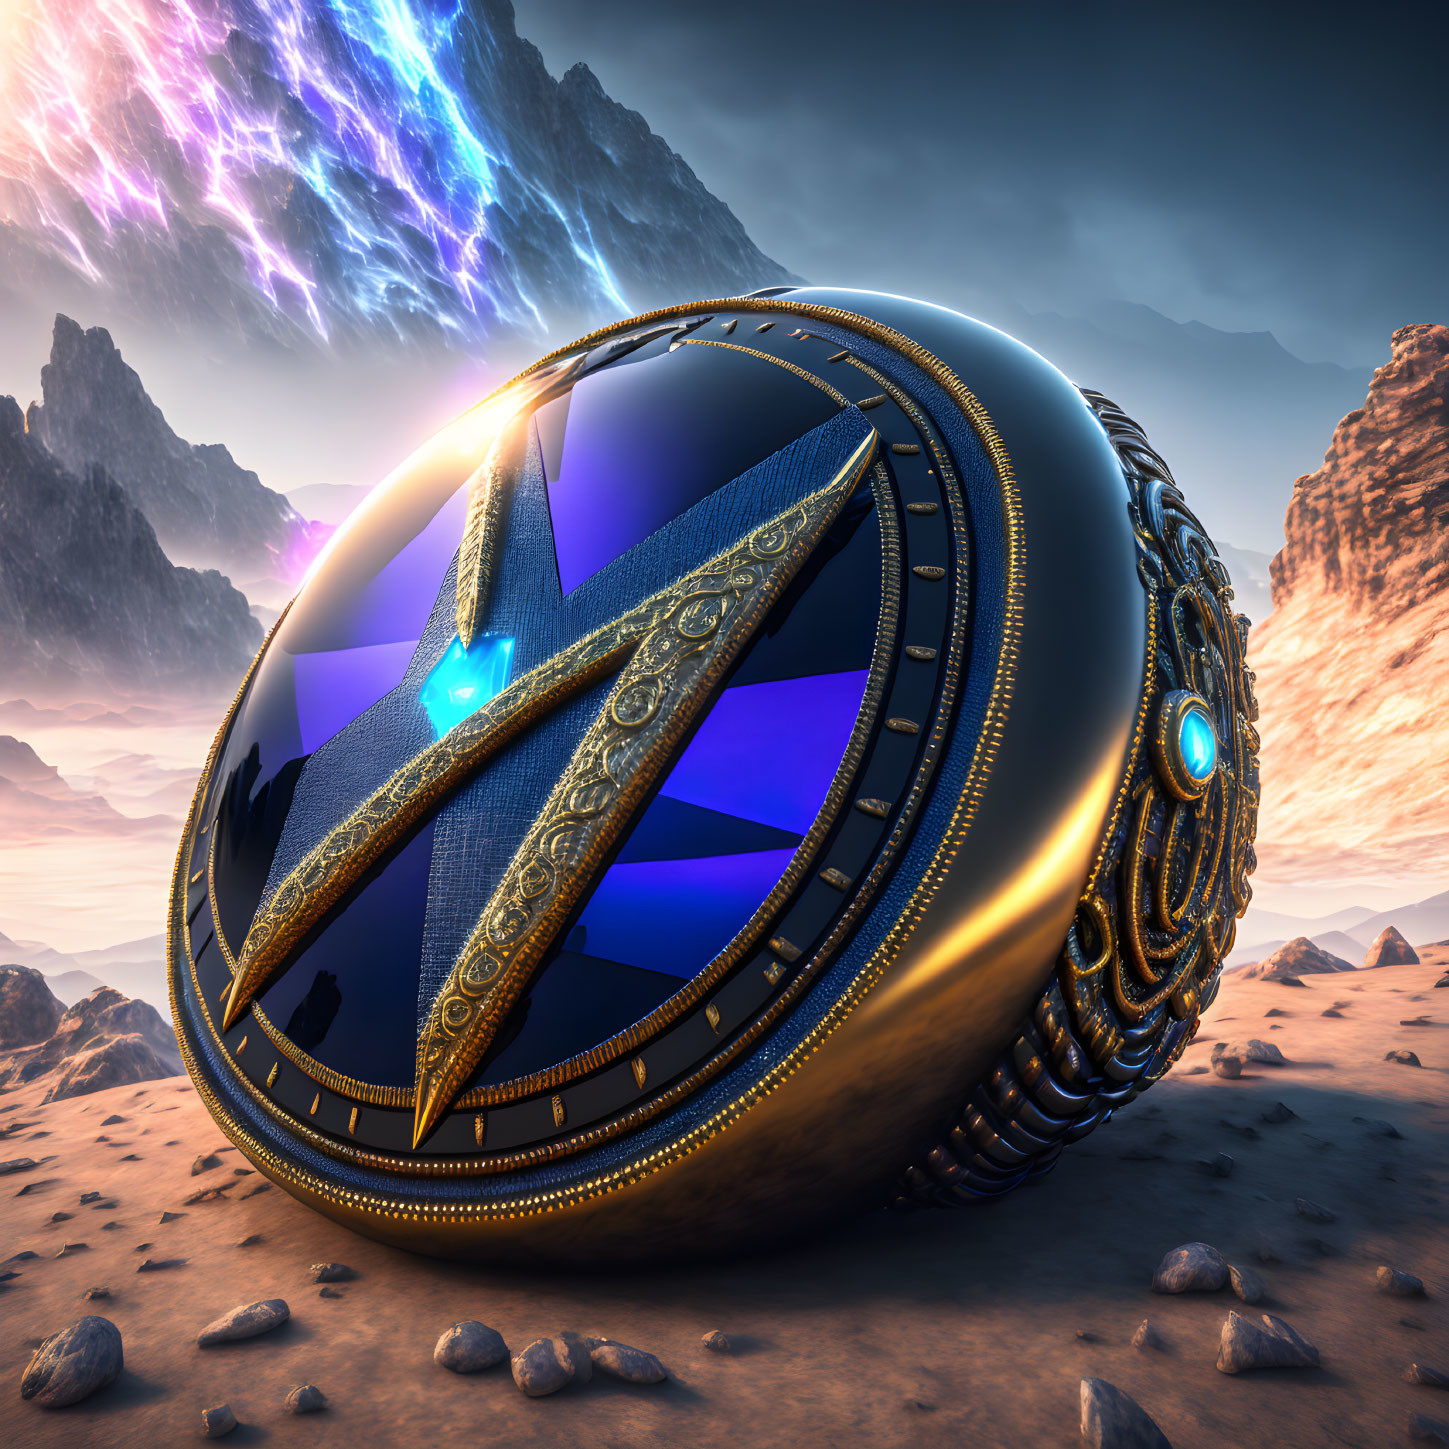 Ornate futuristic spherical object on alien landscape with purple skies